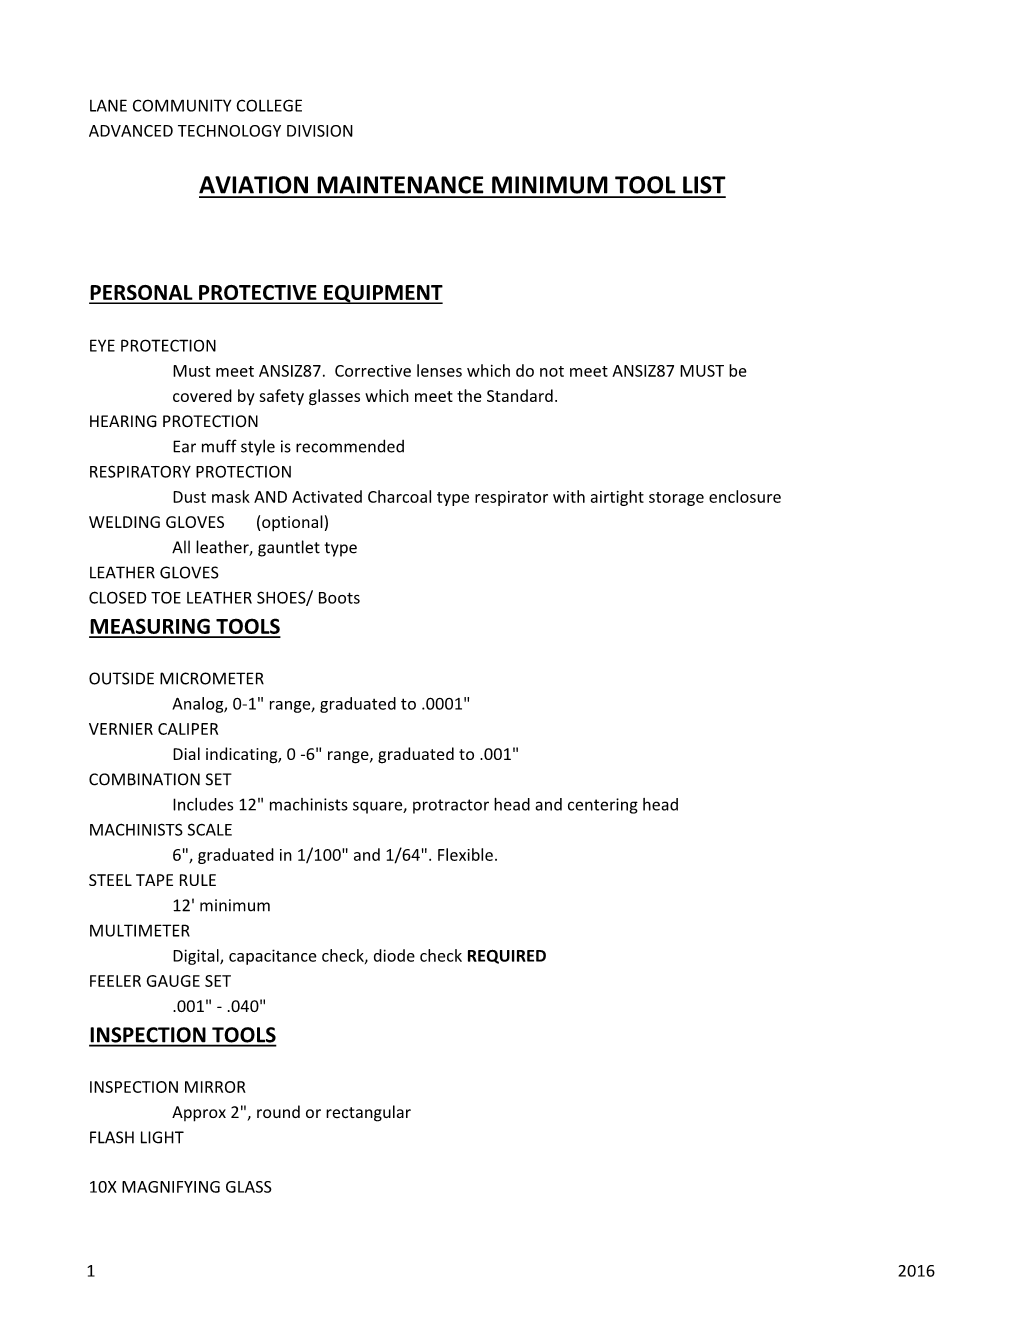 Aviation Maintenance Minimum Tool List